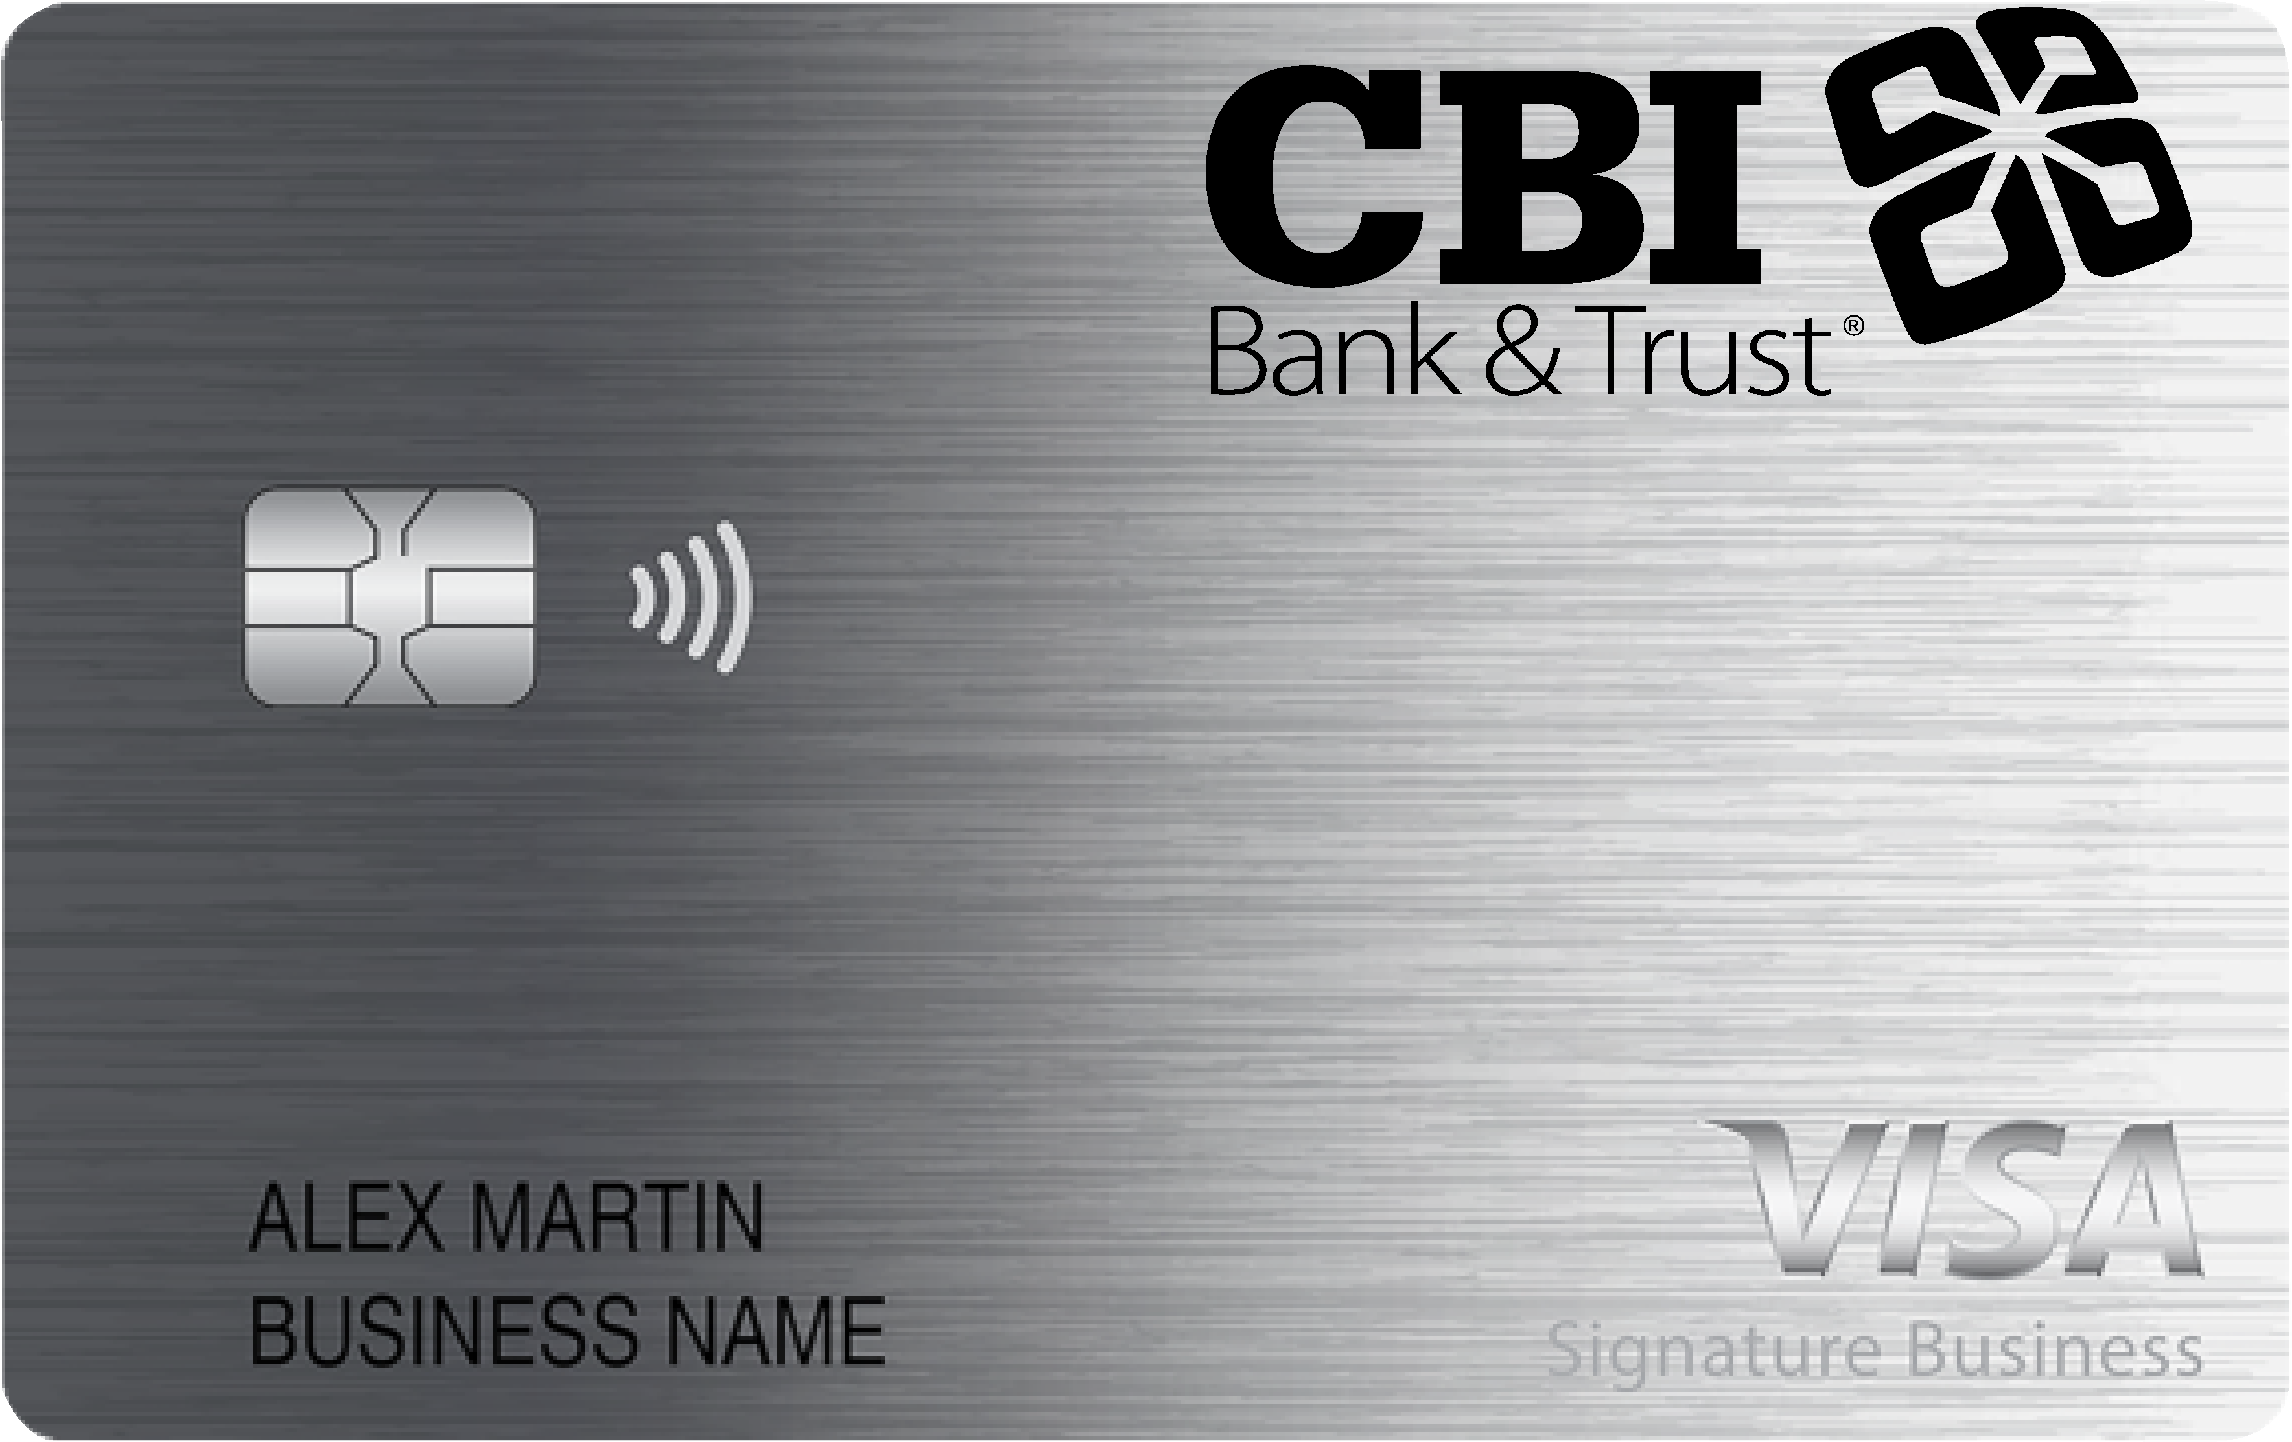 CBI Bank & Trust Smart Business Rewards Card